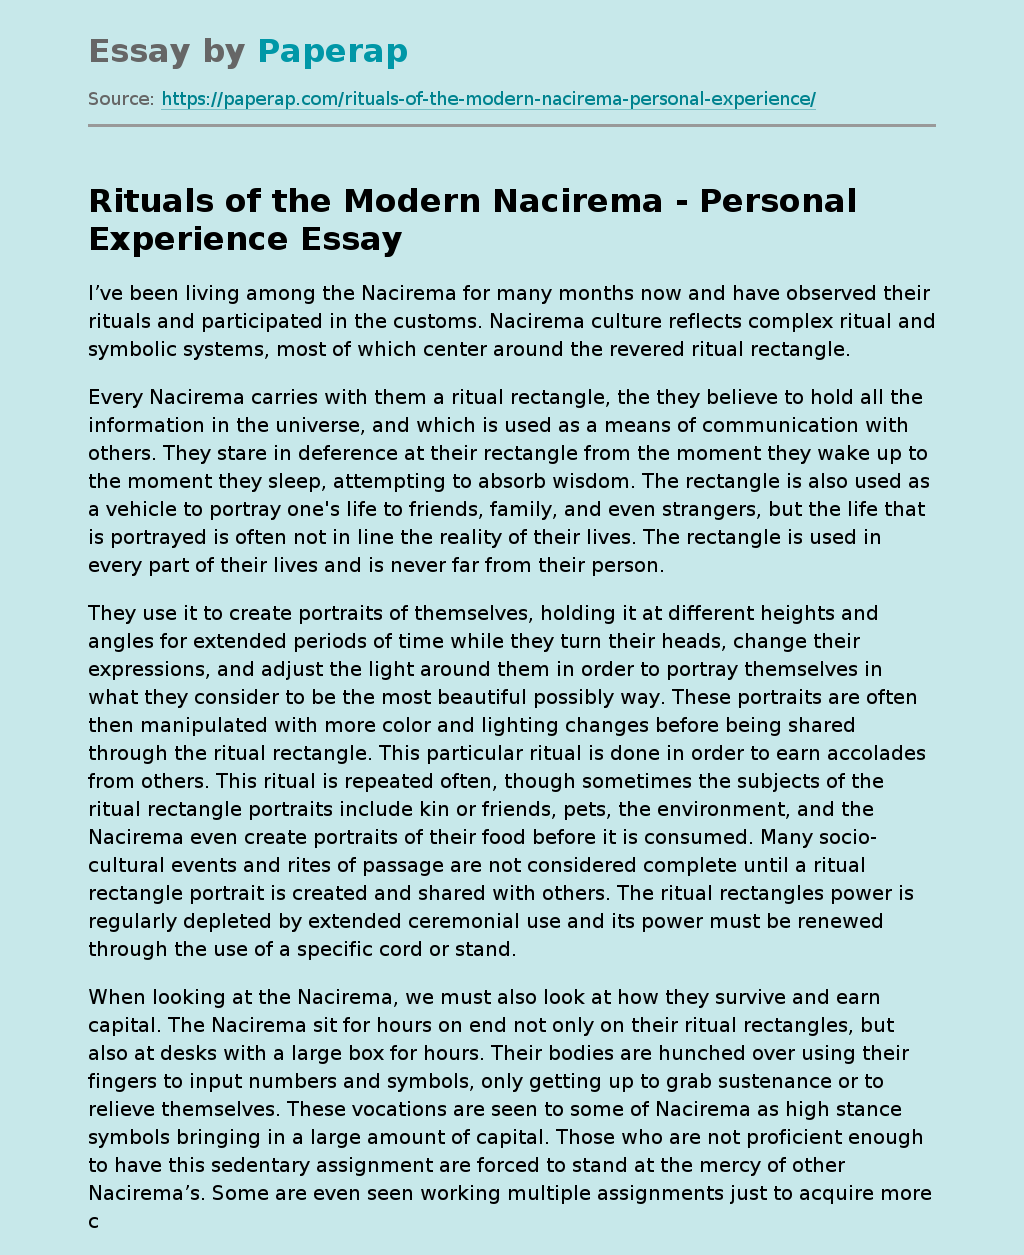 Rituals of the Modern Nacirema - Personal Experience